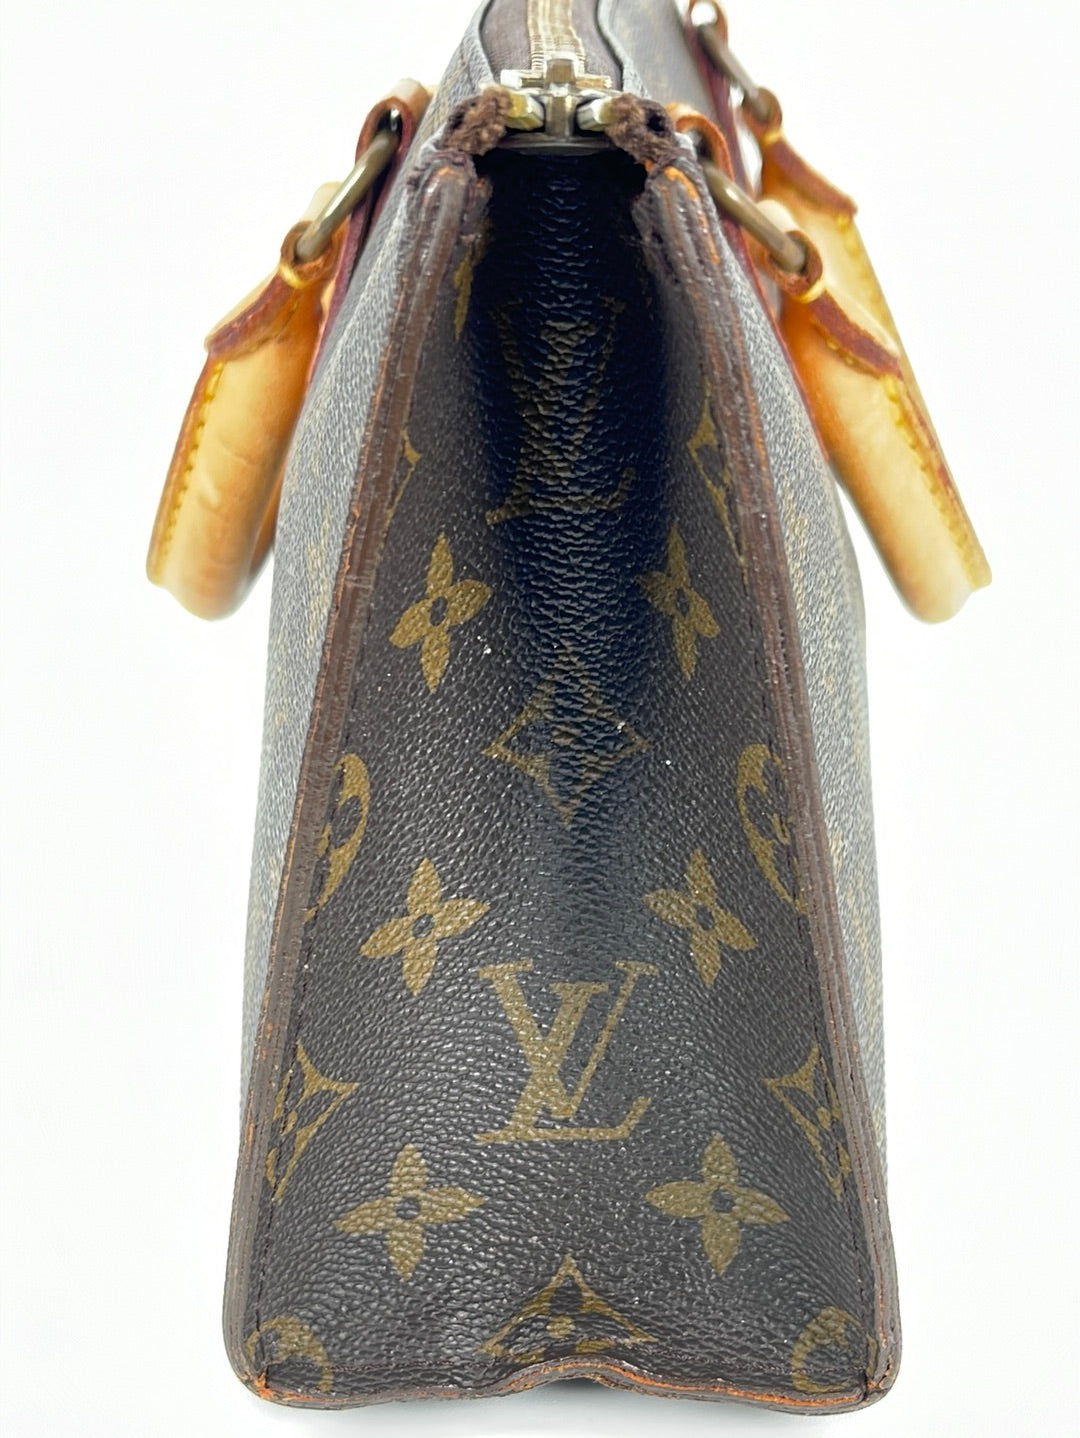 Louis Vuitton Monogram Triangle Sac